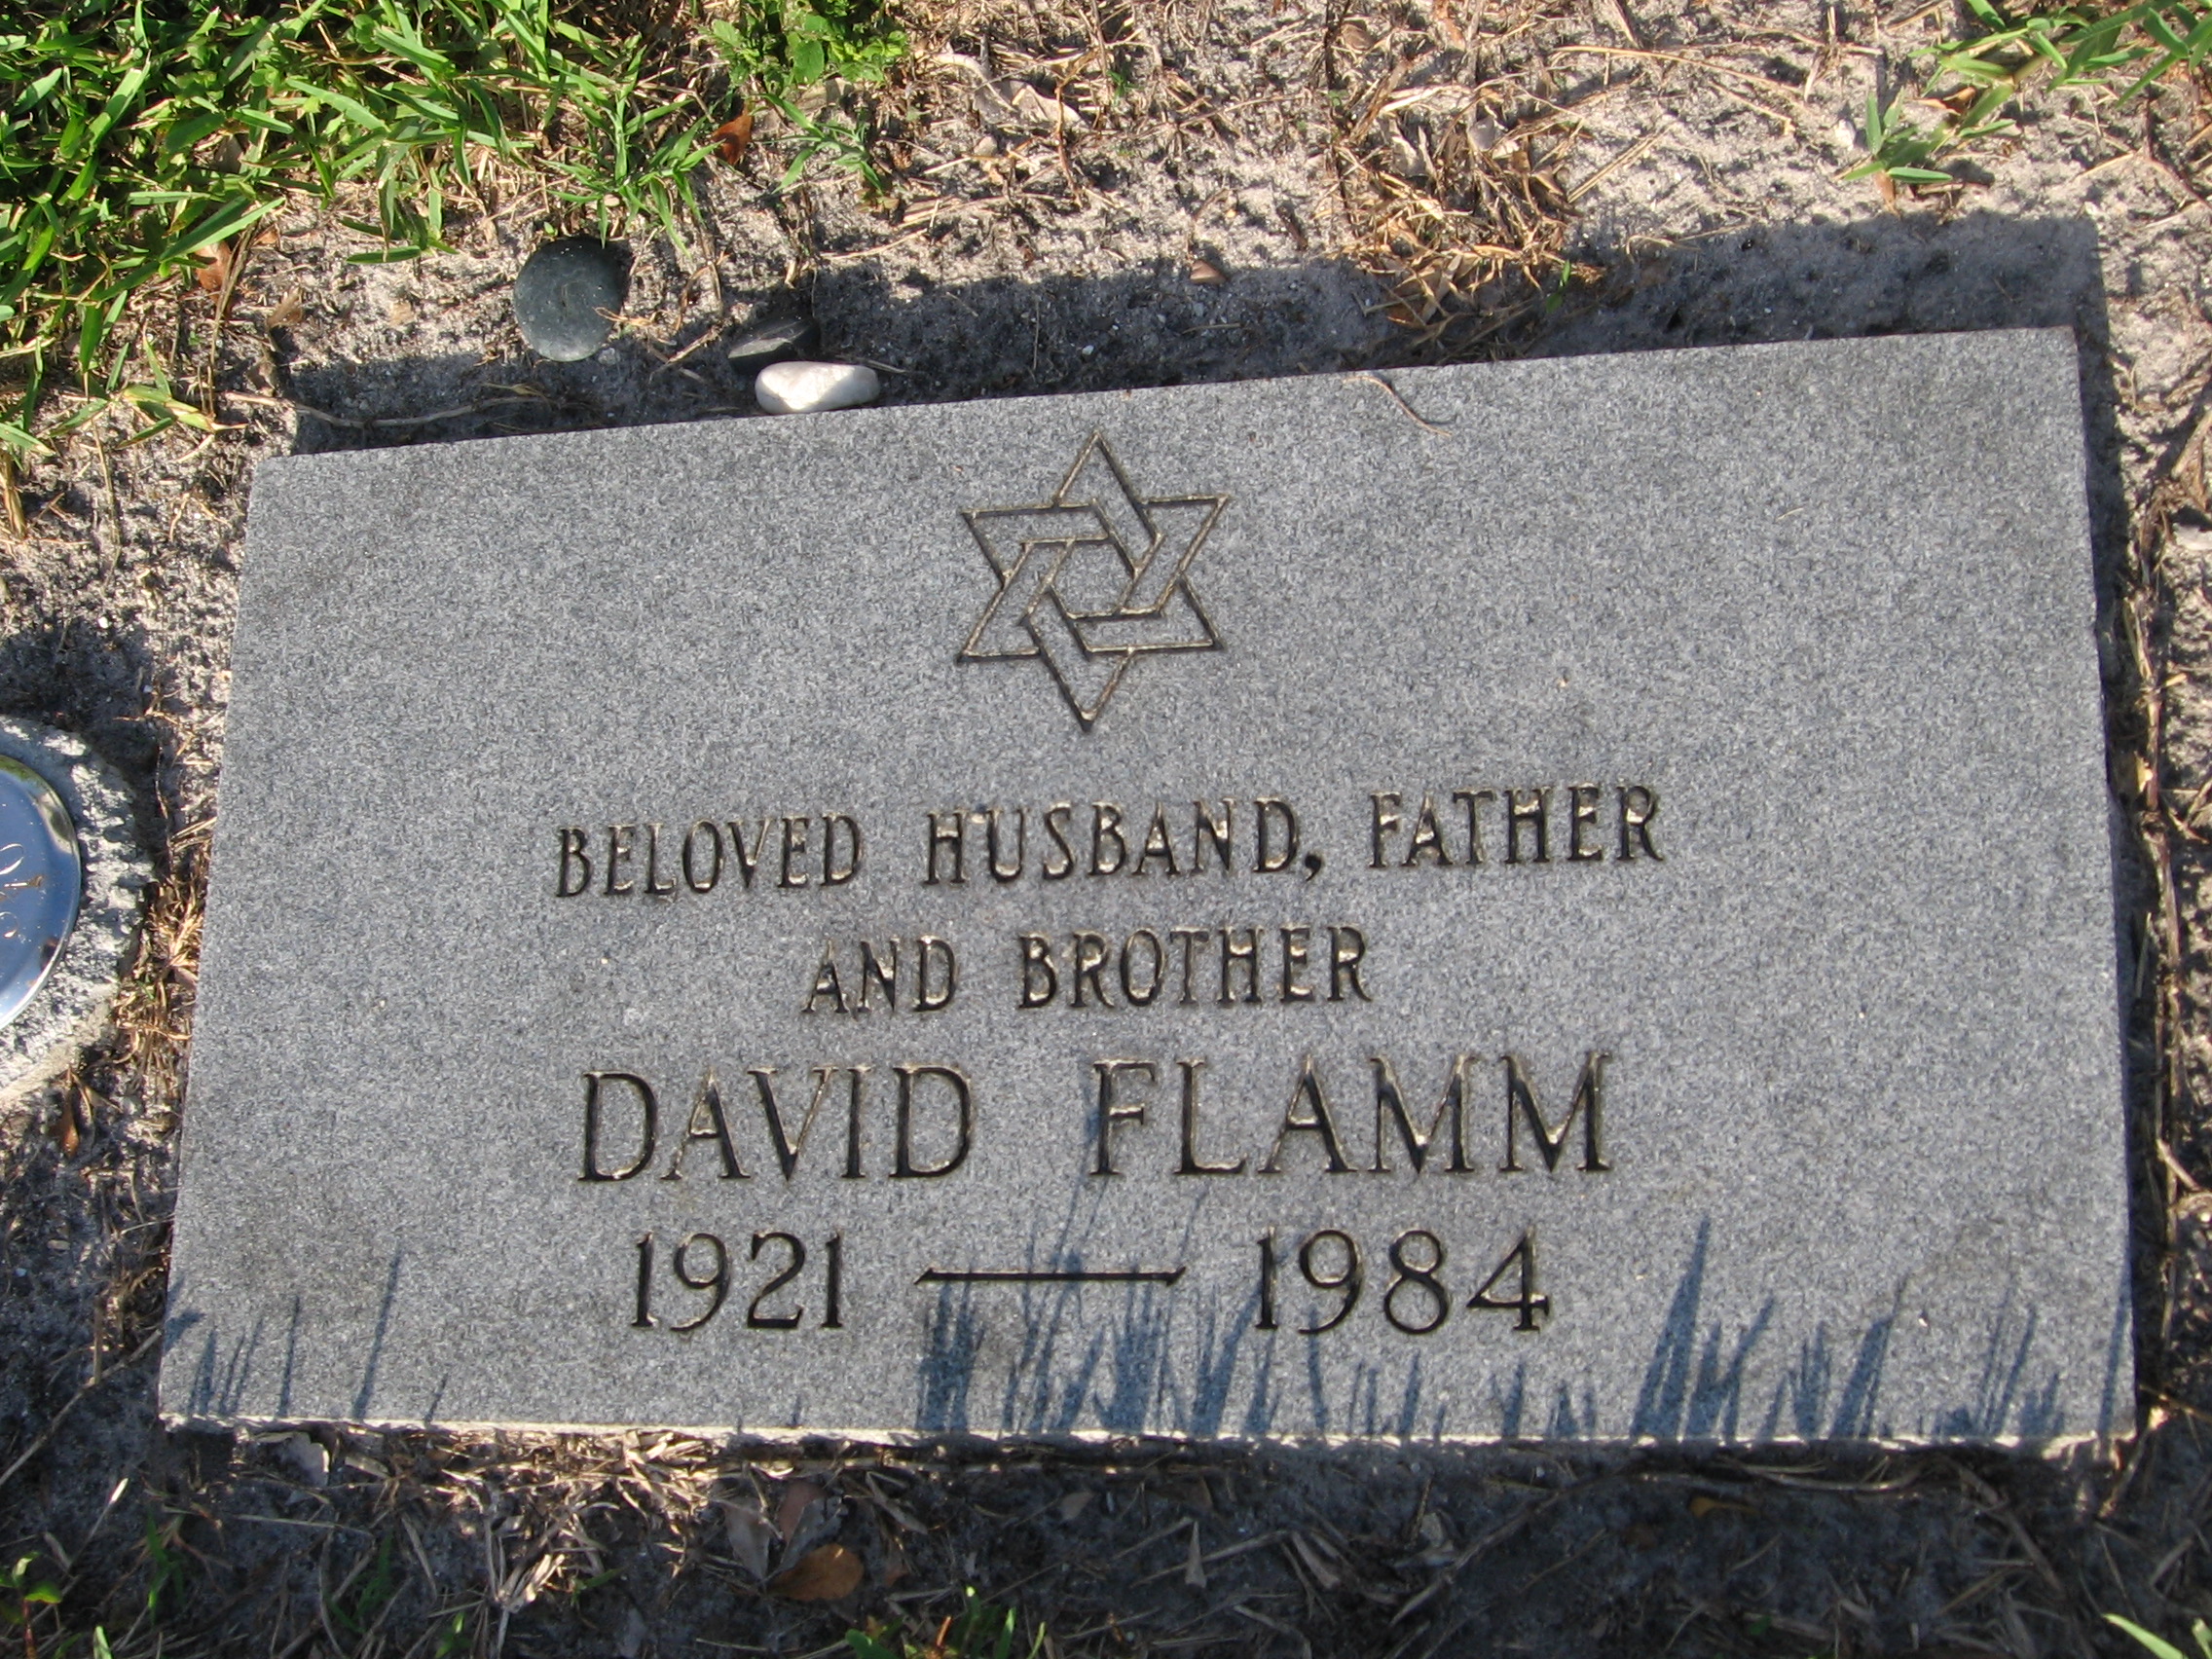 David Flamm